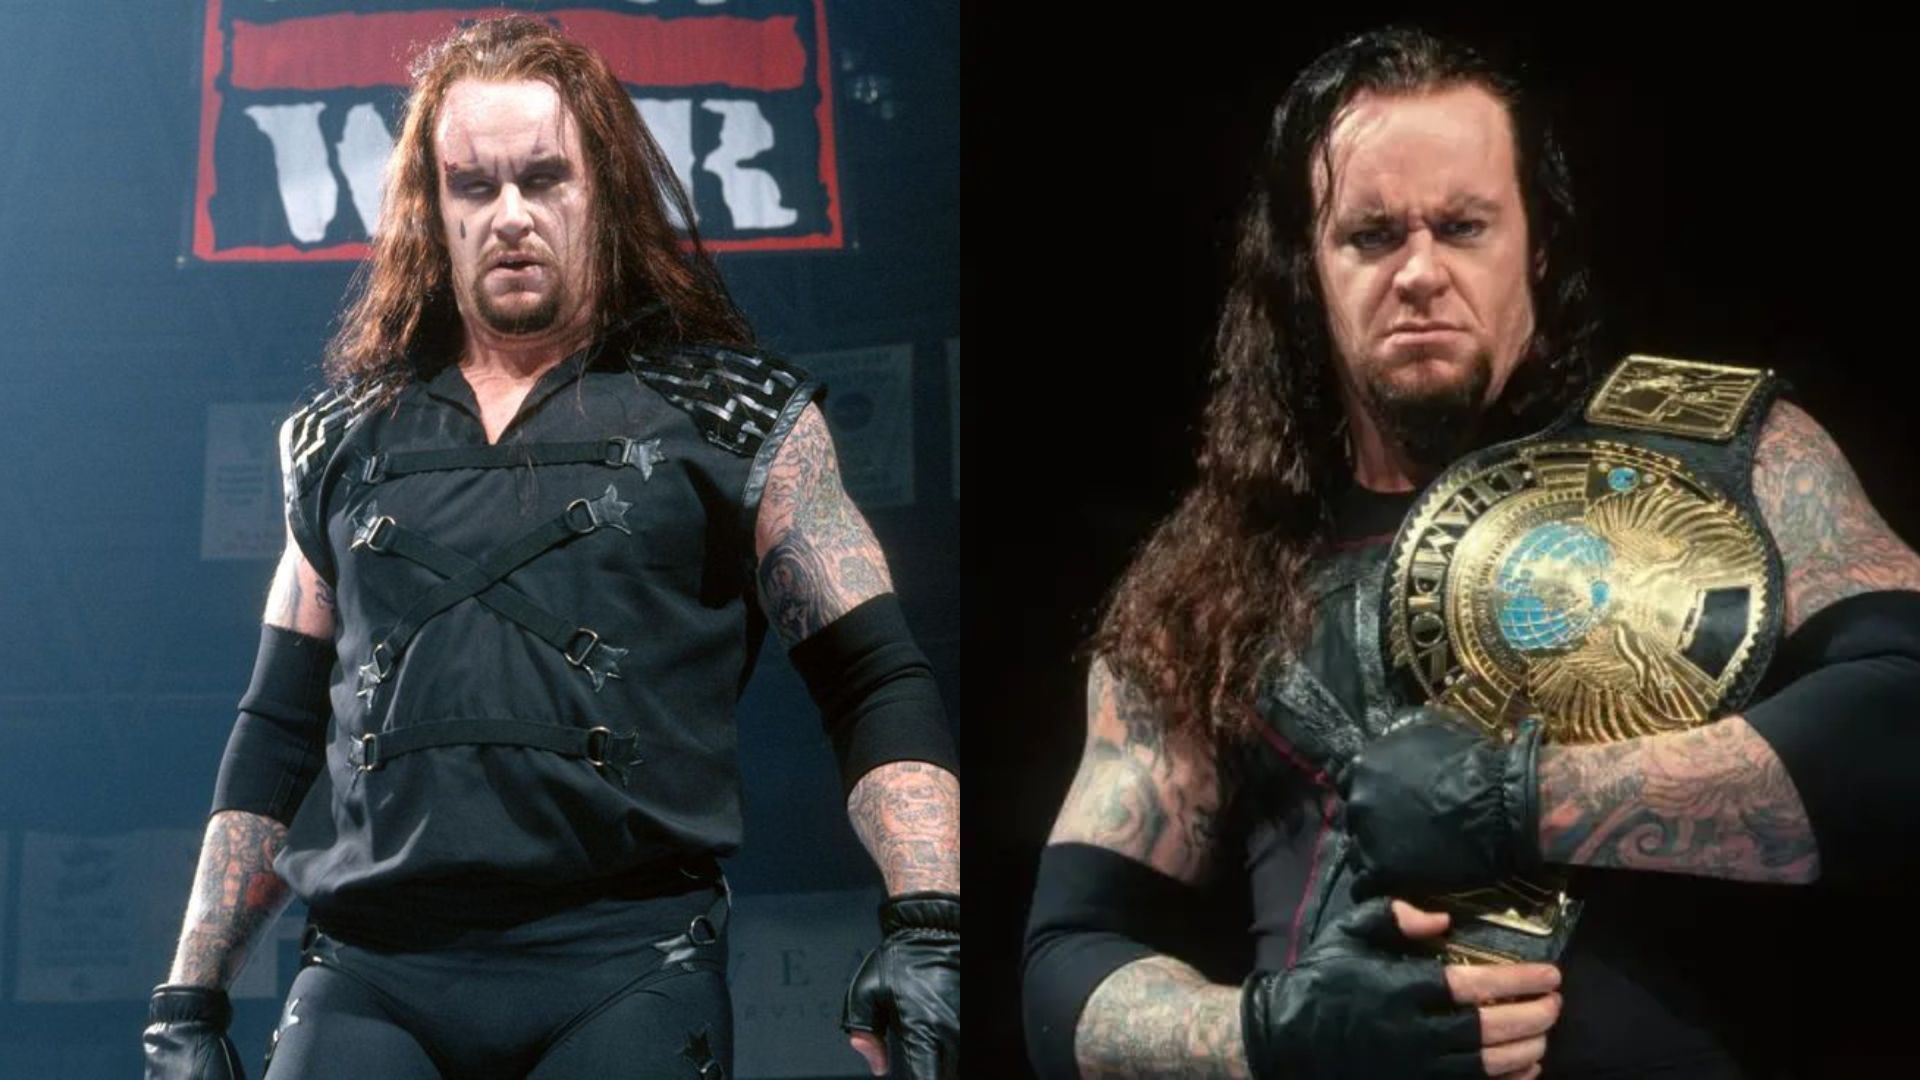 The Undertaker during the attitude era